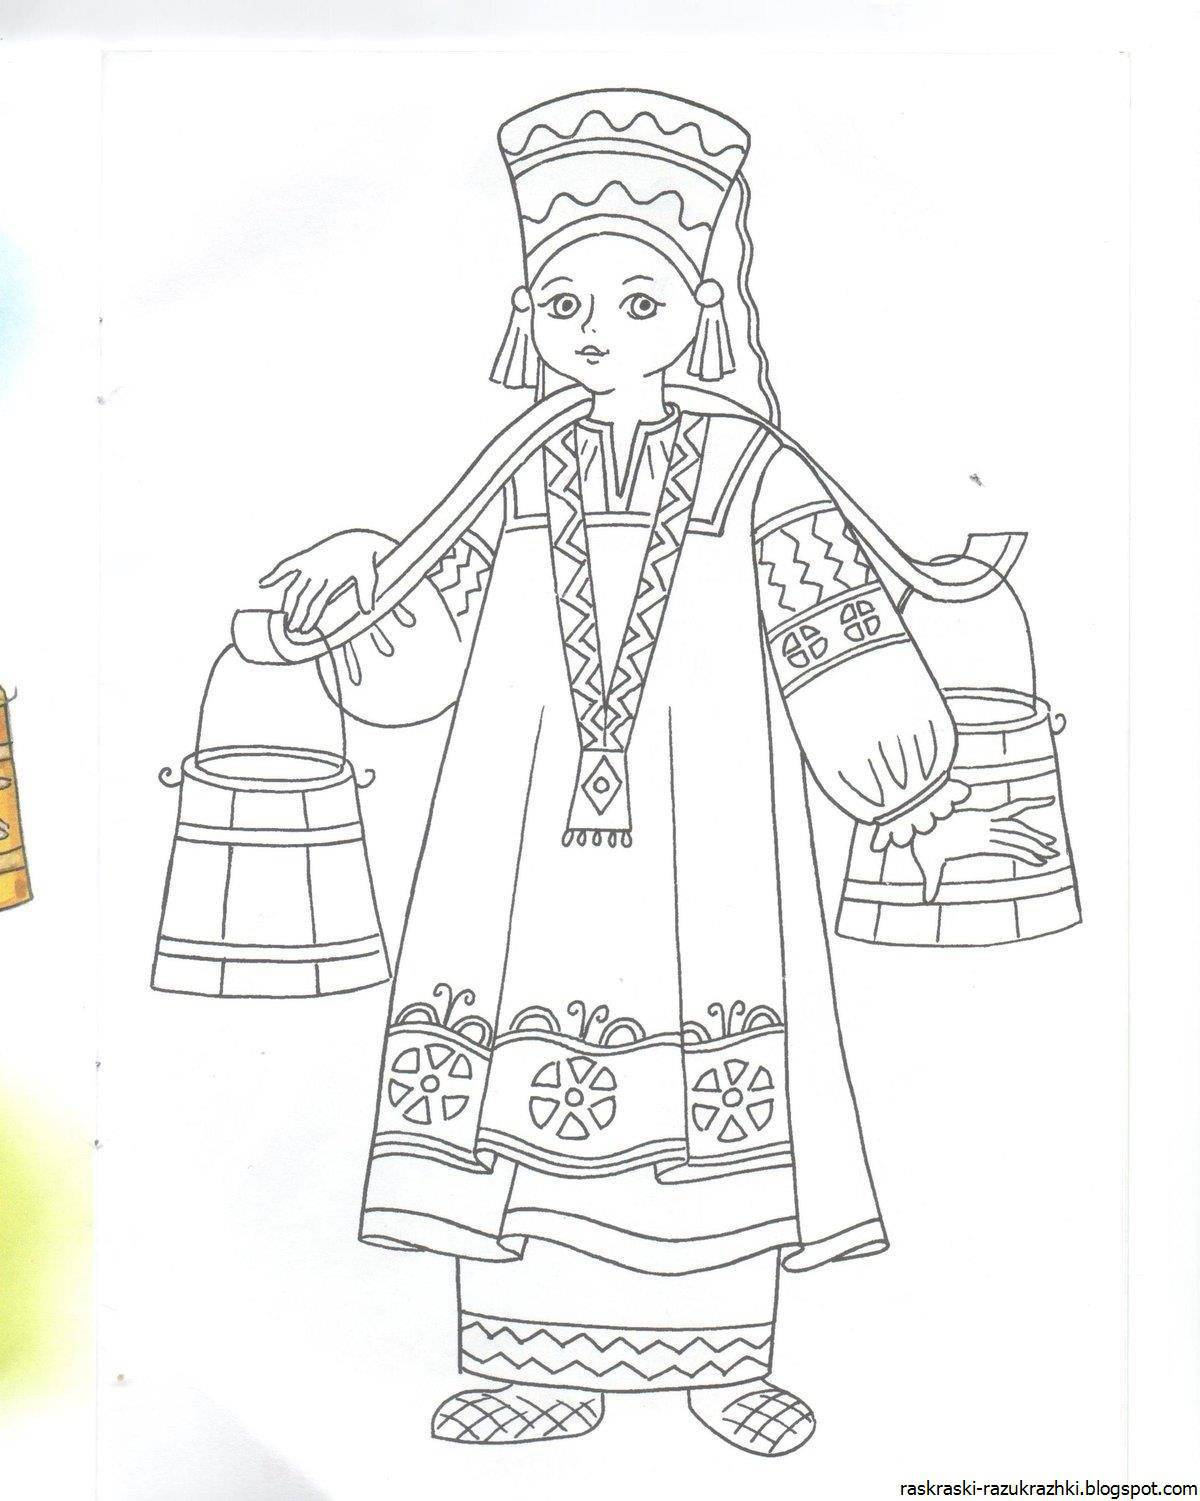 Colouring colorful Russian folk costume